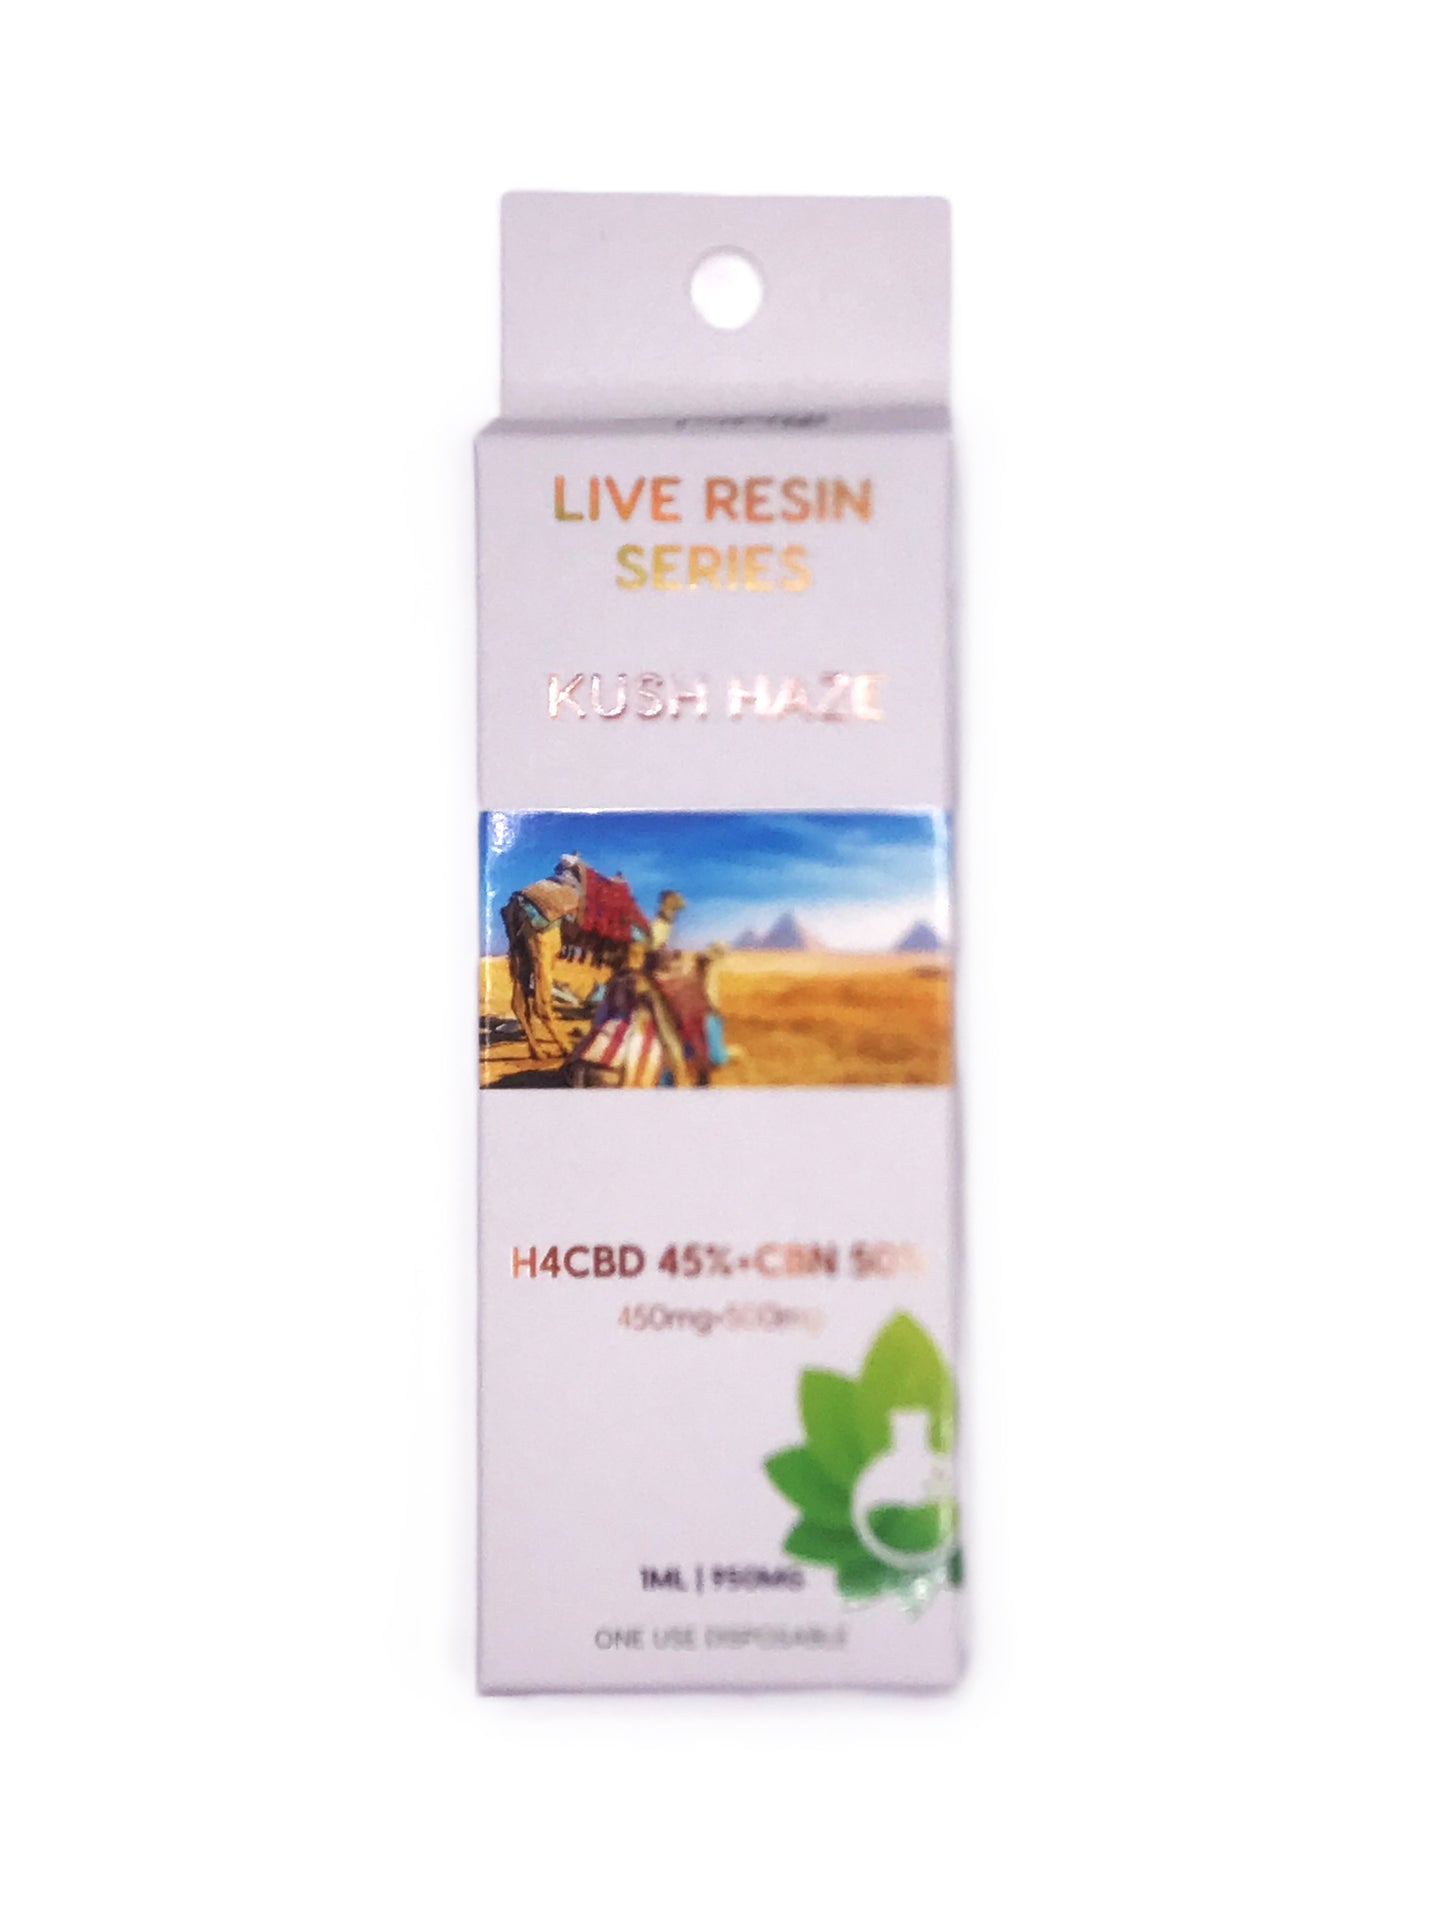 Live Resin Series H4CBD 45% + 50% CBN